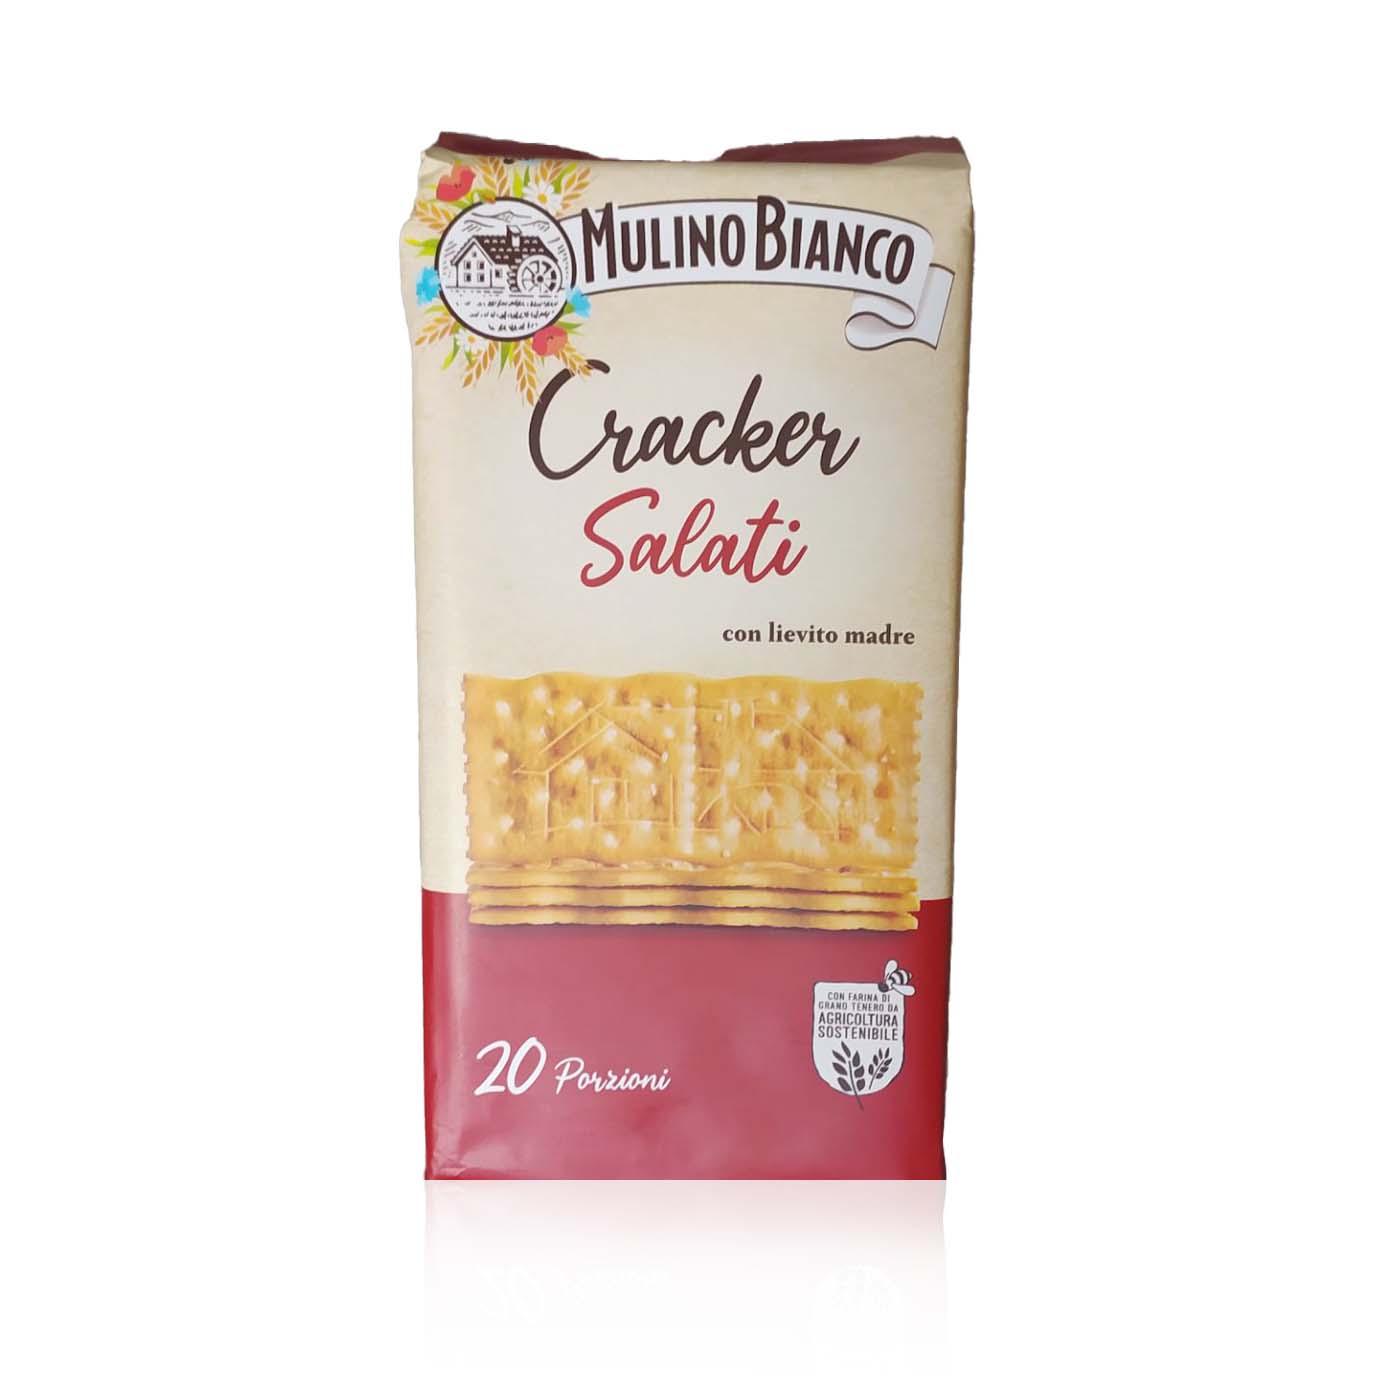 MULINO BIANCO - Cracker Salati - 20 Portionen - 0,5kg